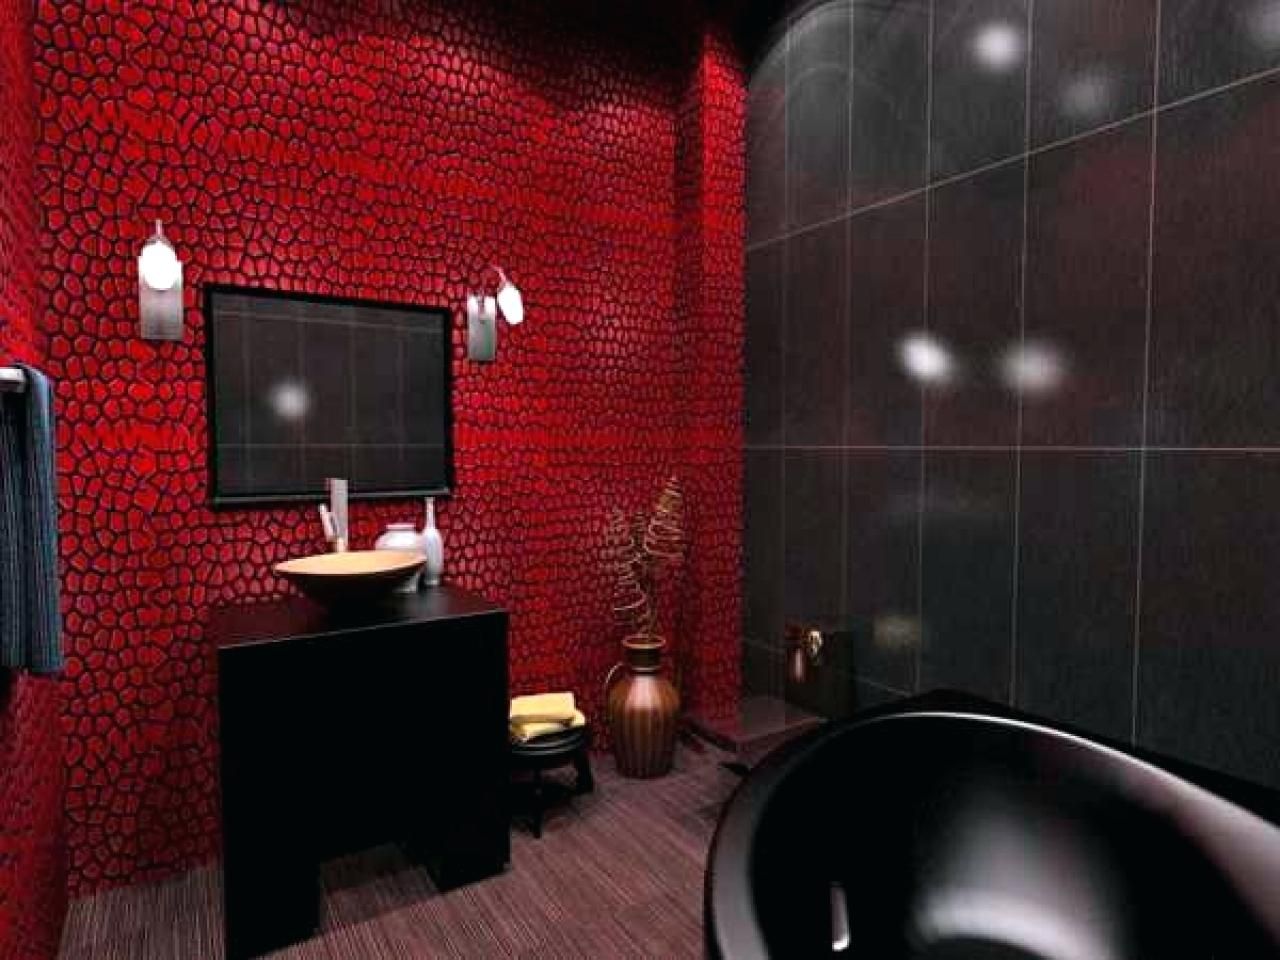 Red And Black Bathroom Design Ideas Black bathroom decor, Bathroom red